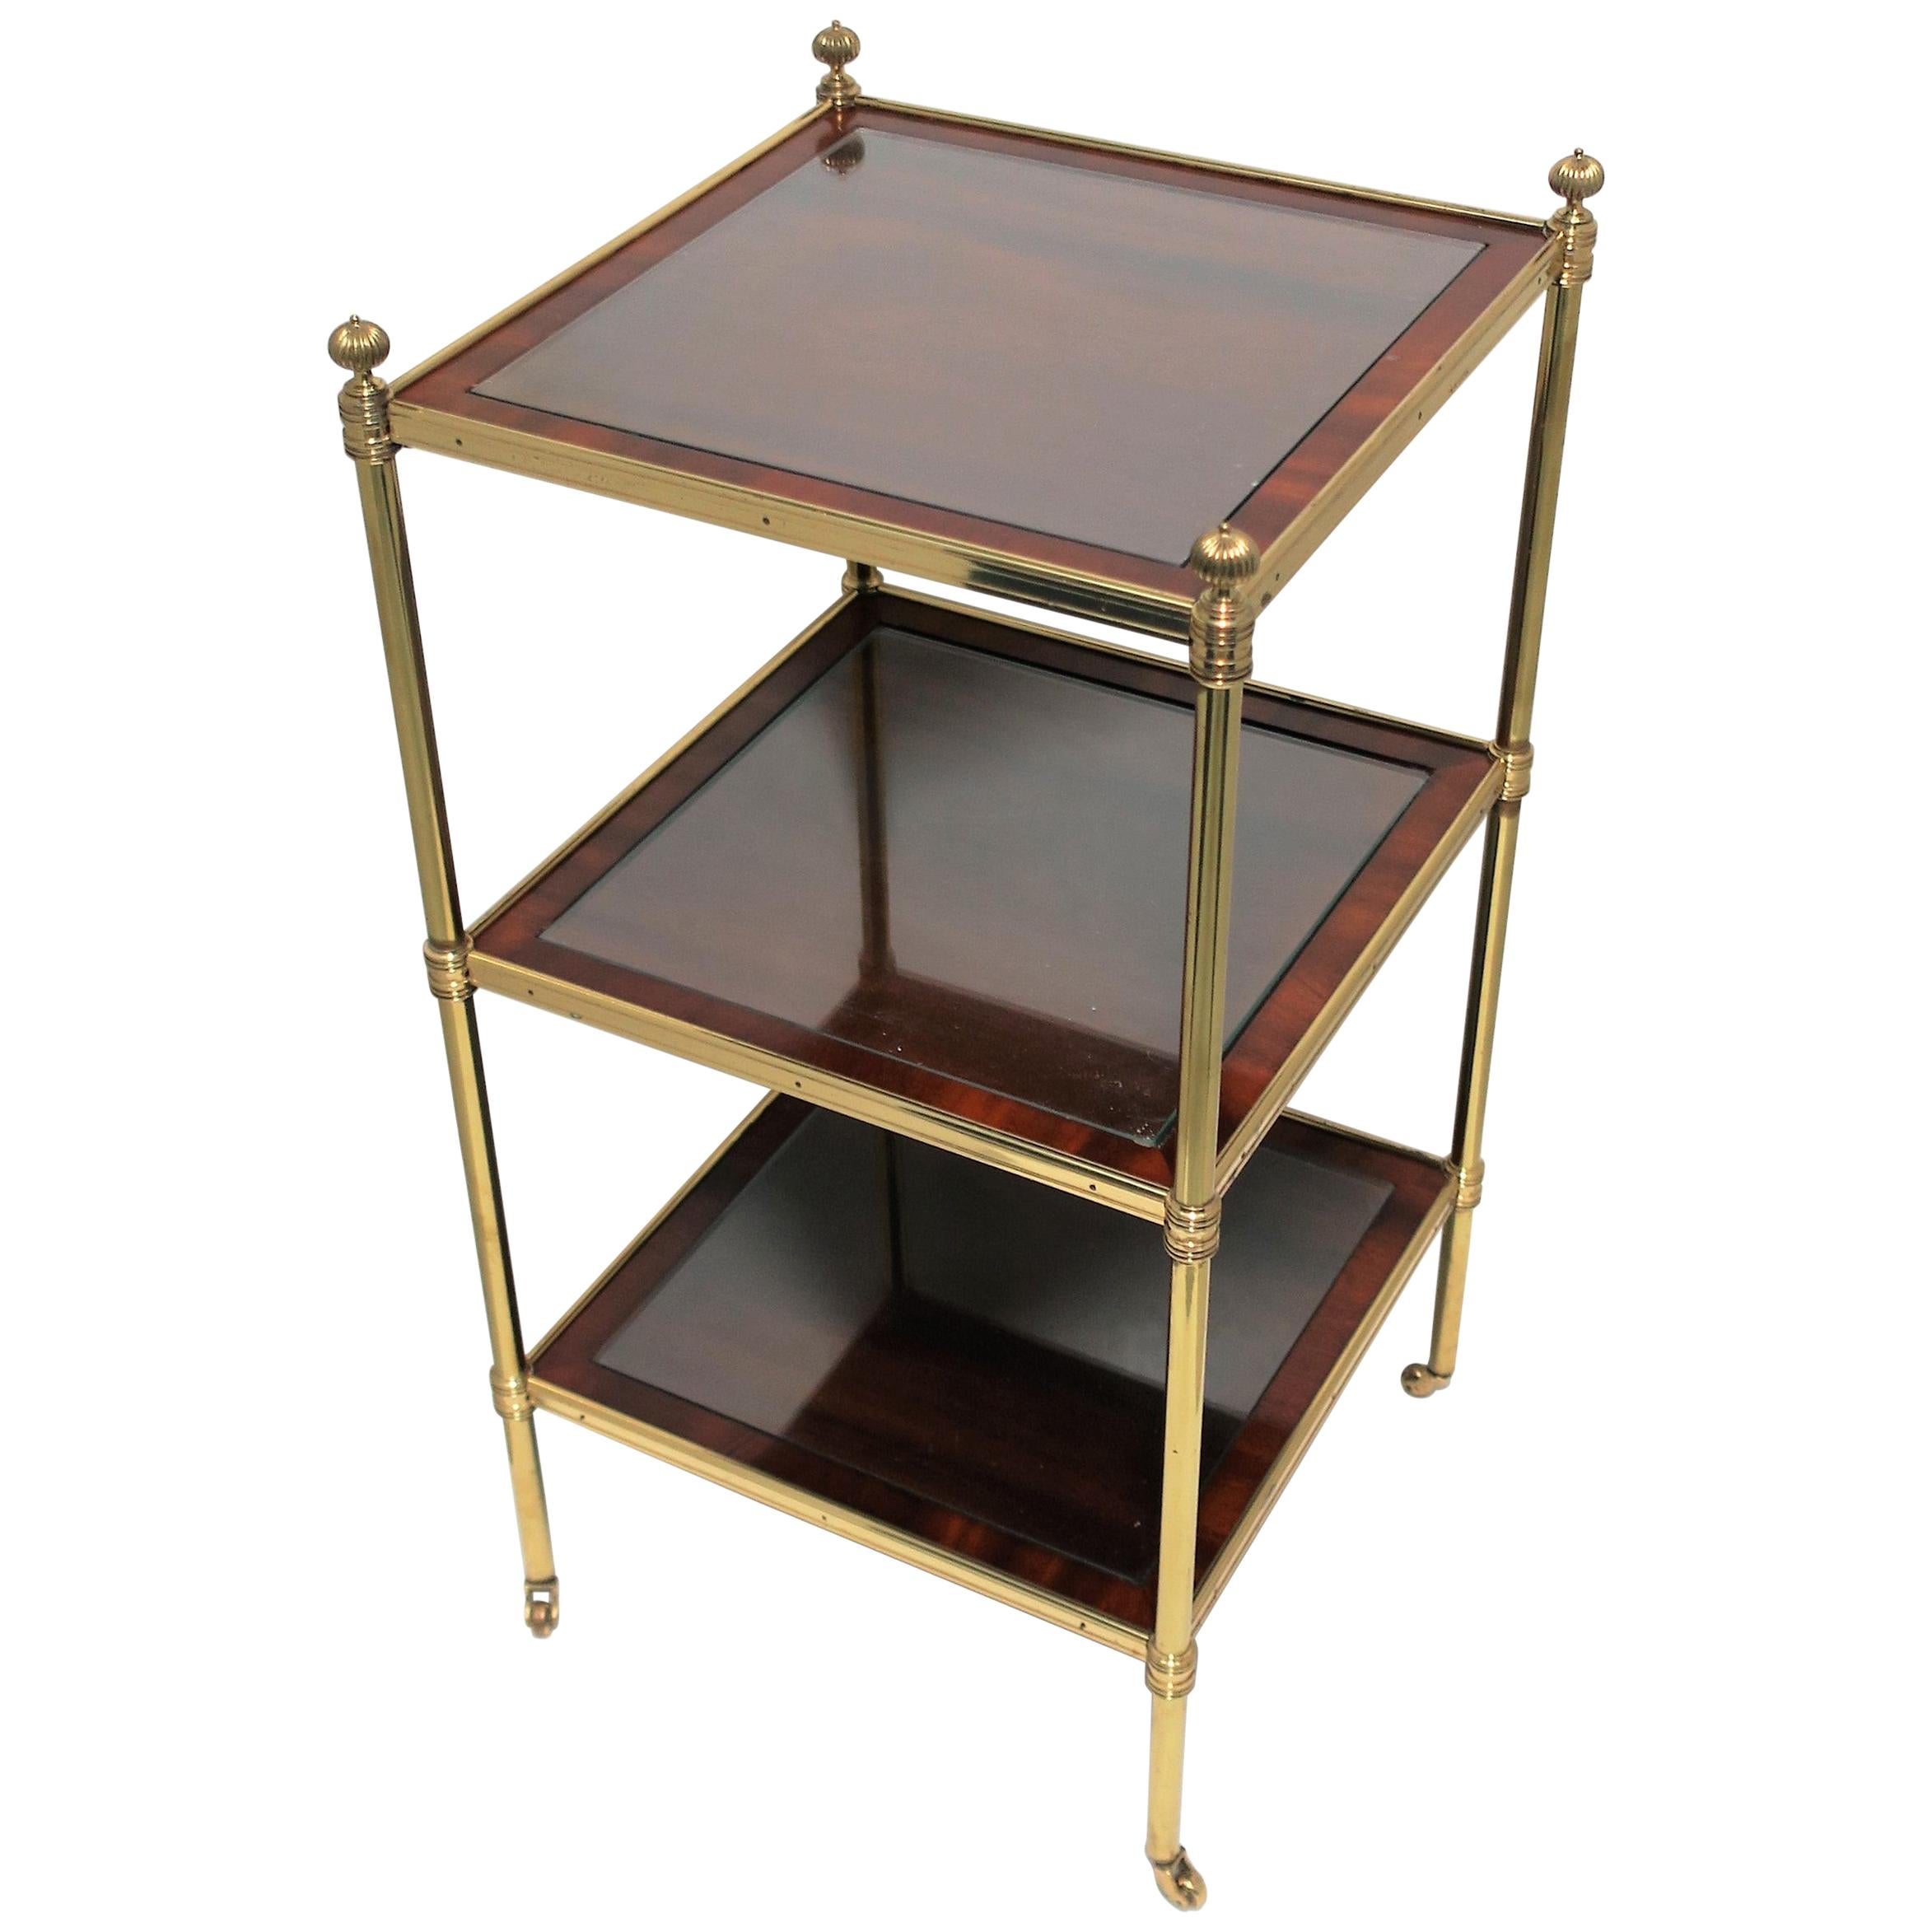 Designer English Regency Brass Glass Mahogany Table Shelves by William Tillman